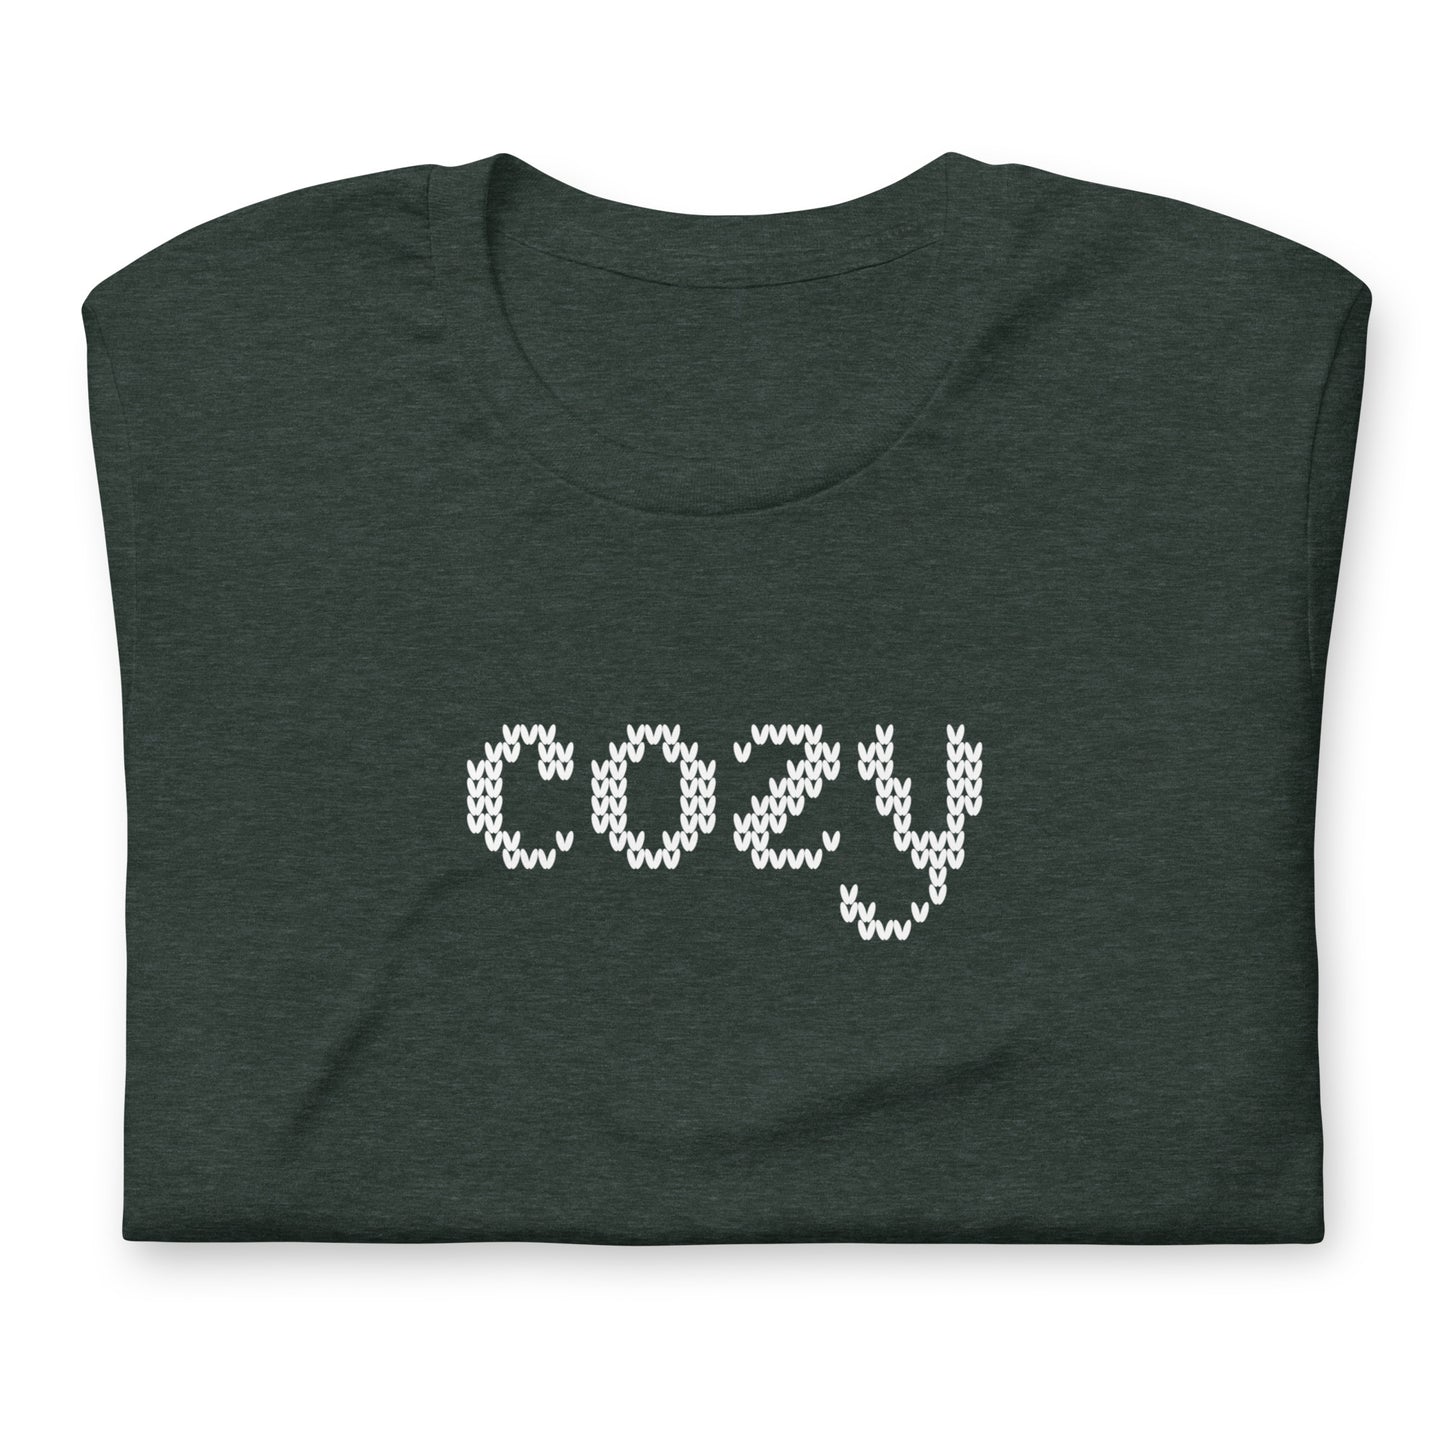 COZY Unisex Heather T-Shirt Logo